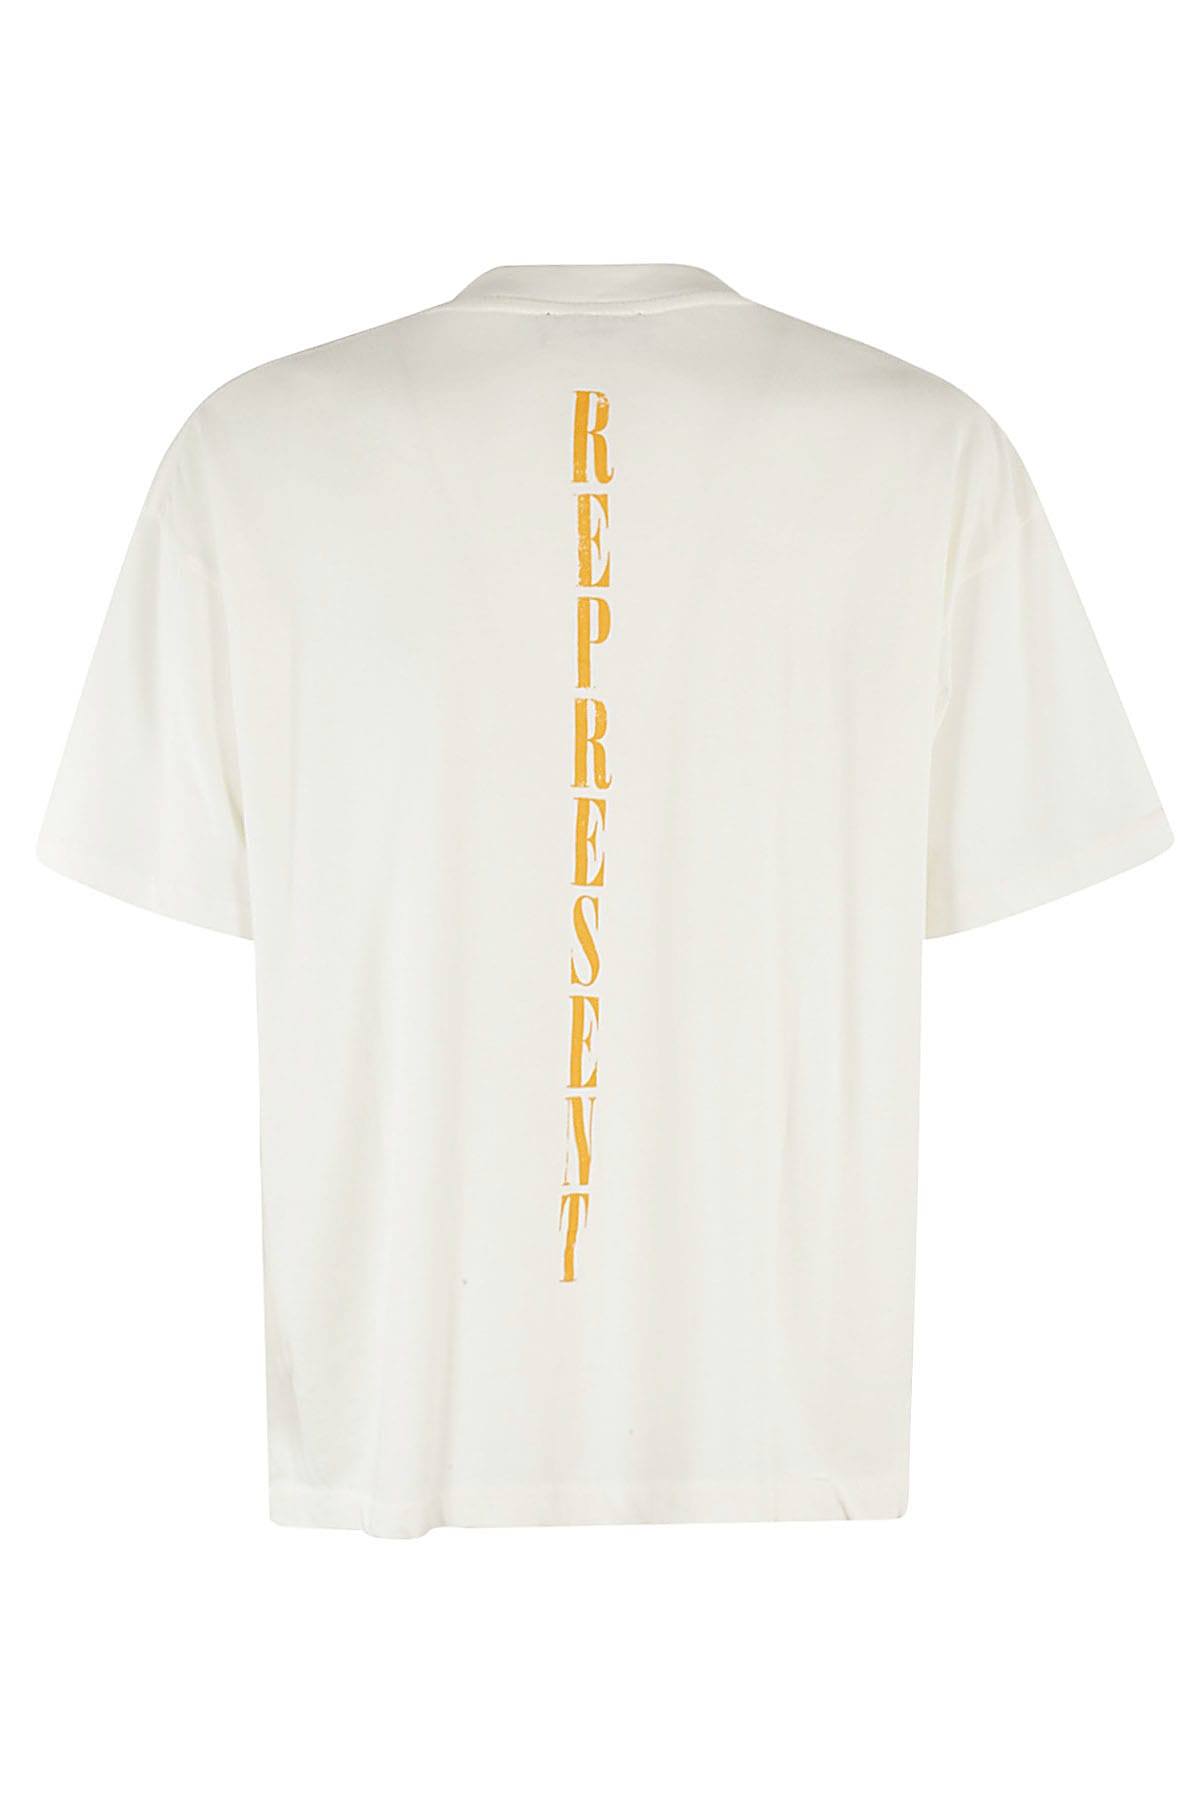 Shop Represent Reborn T Shirt In Flat White